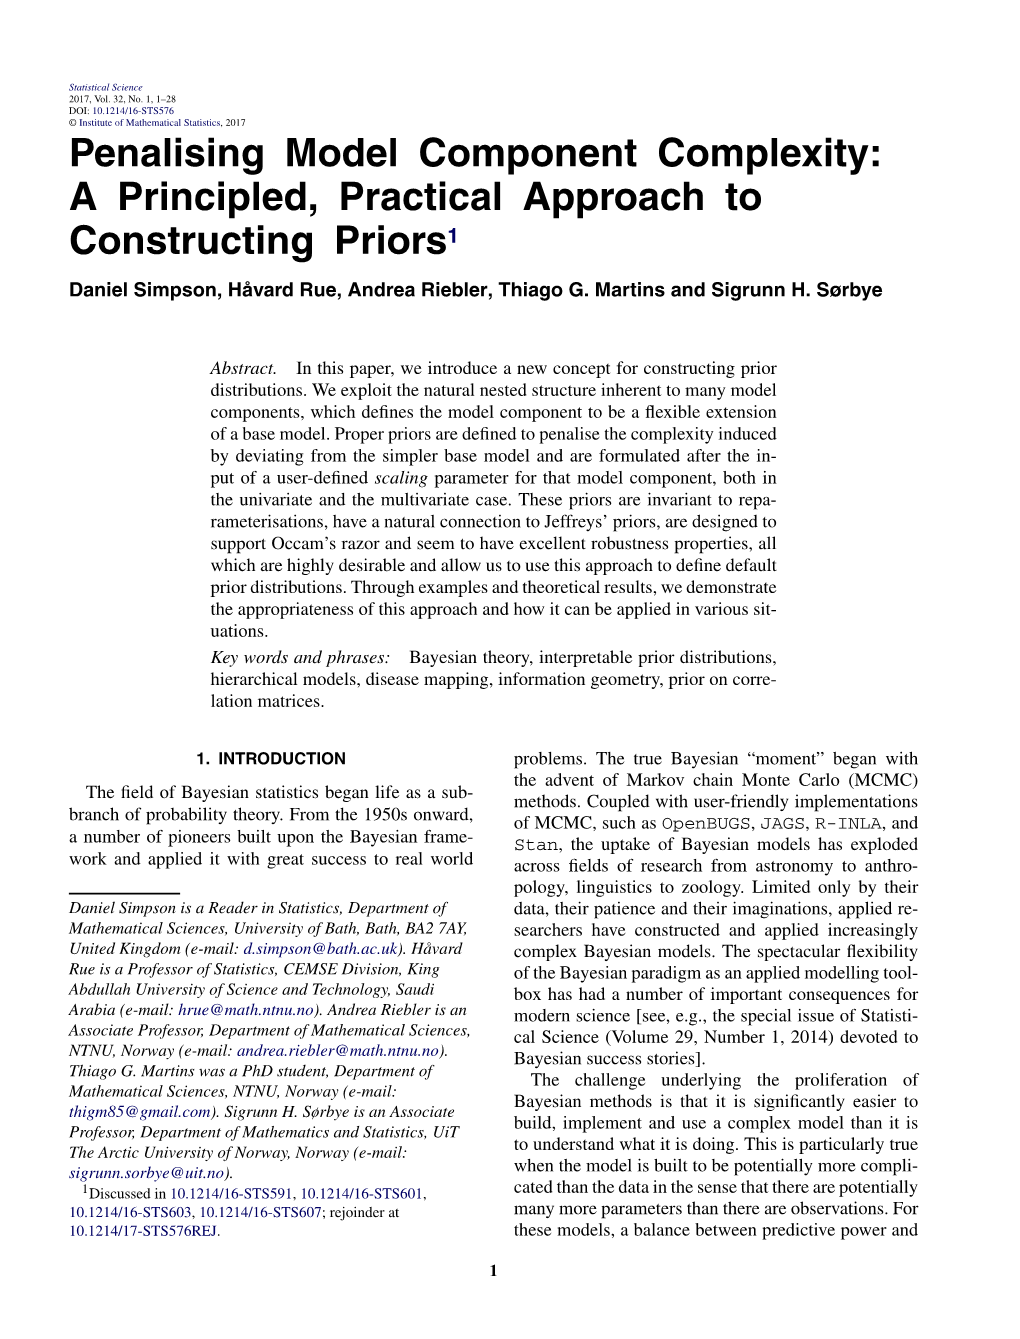 A Principled, Practical Approach to Constructing Priors1 Daniel Simpson, Håvard Rue, Andrea Riebler, Thiago G